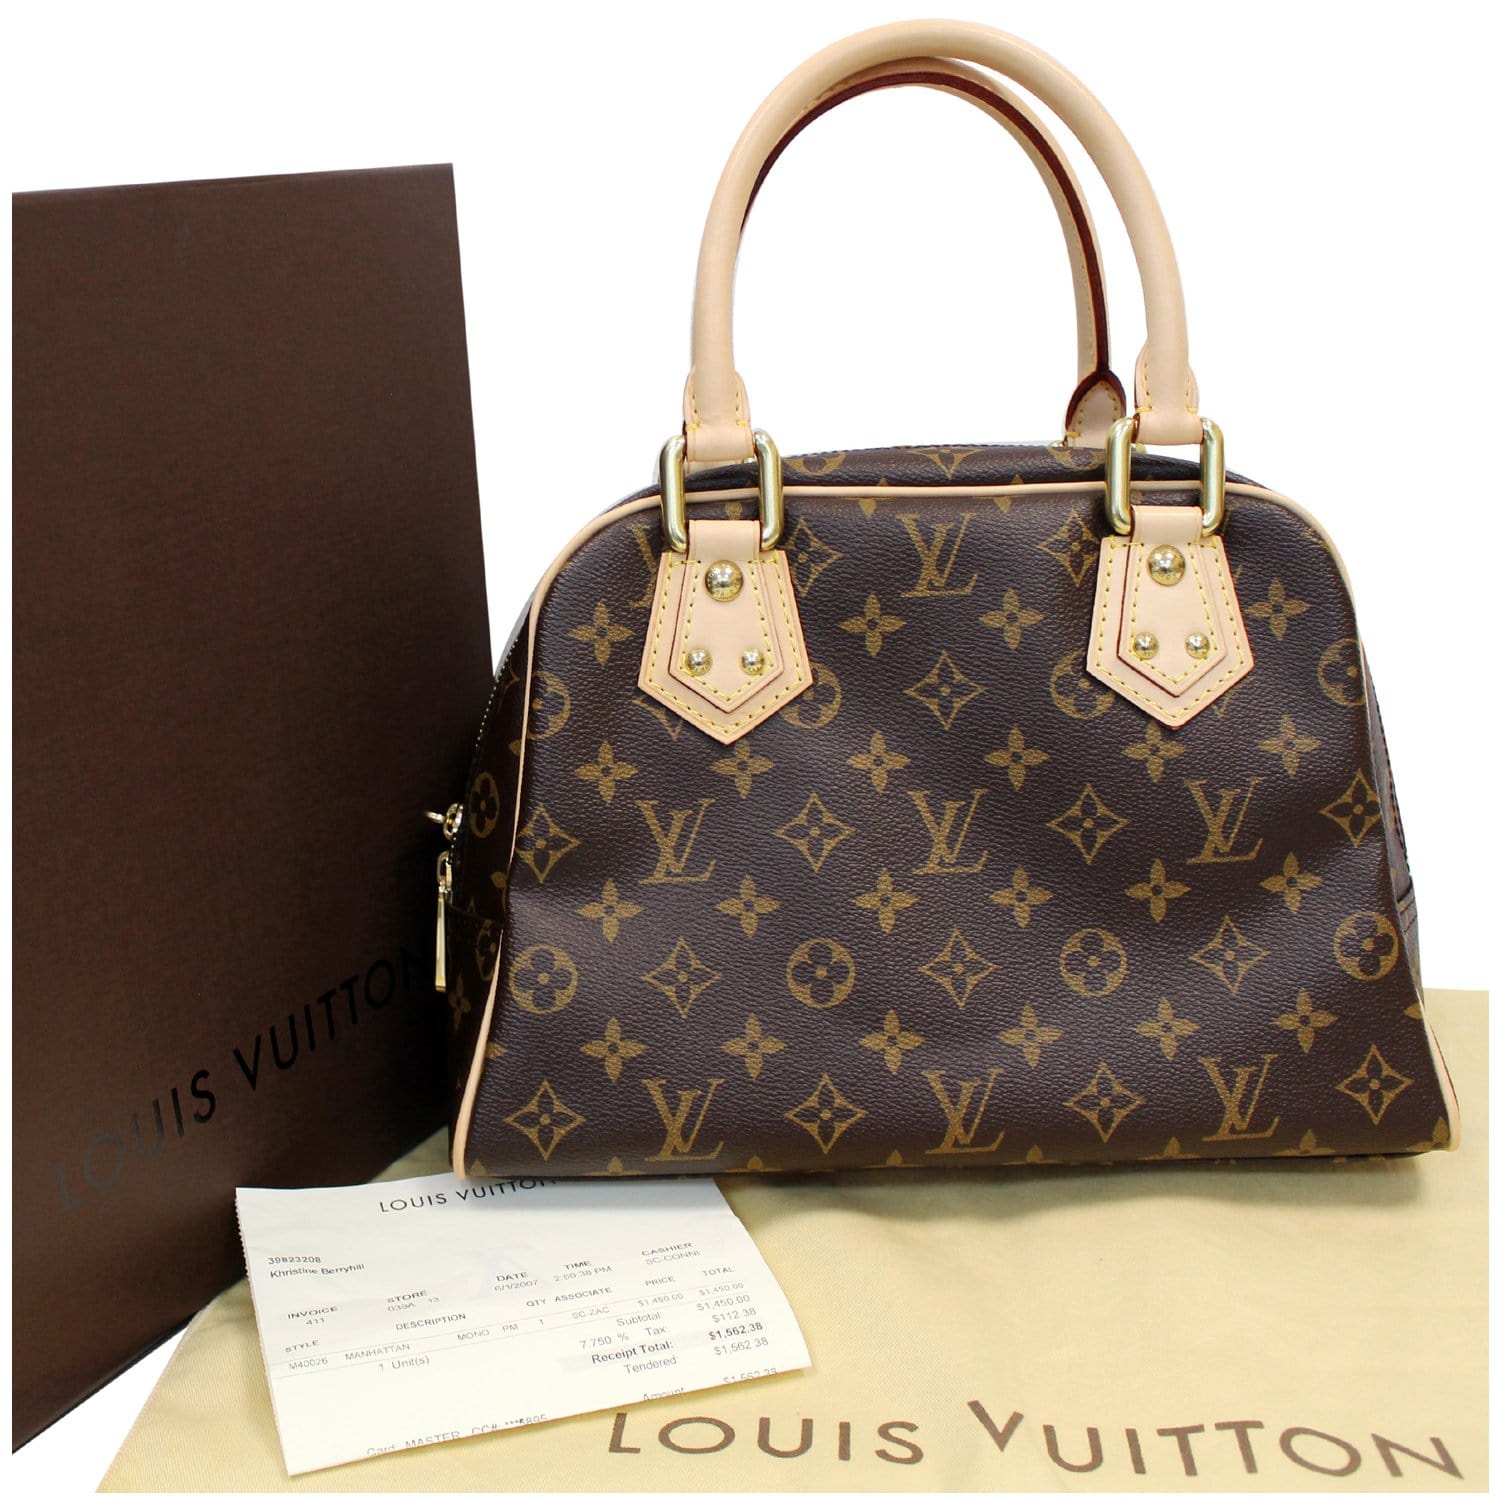 LOUIS VUITTON Monogram M40026 Manhattan PM Handbag